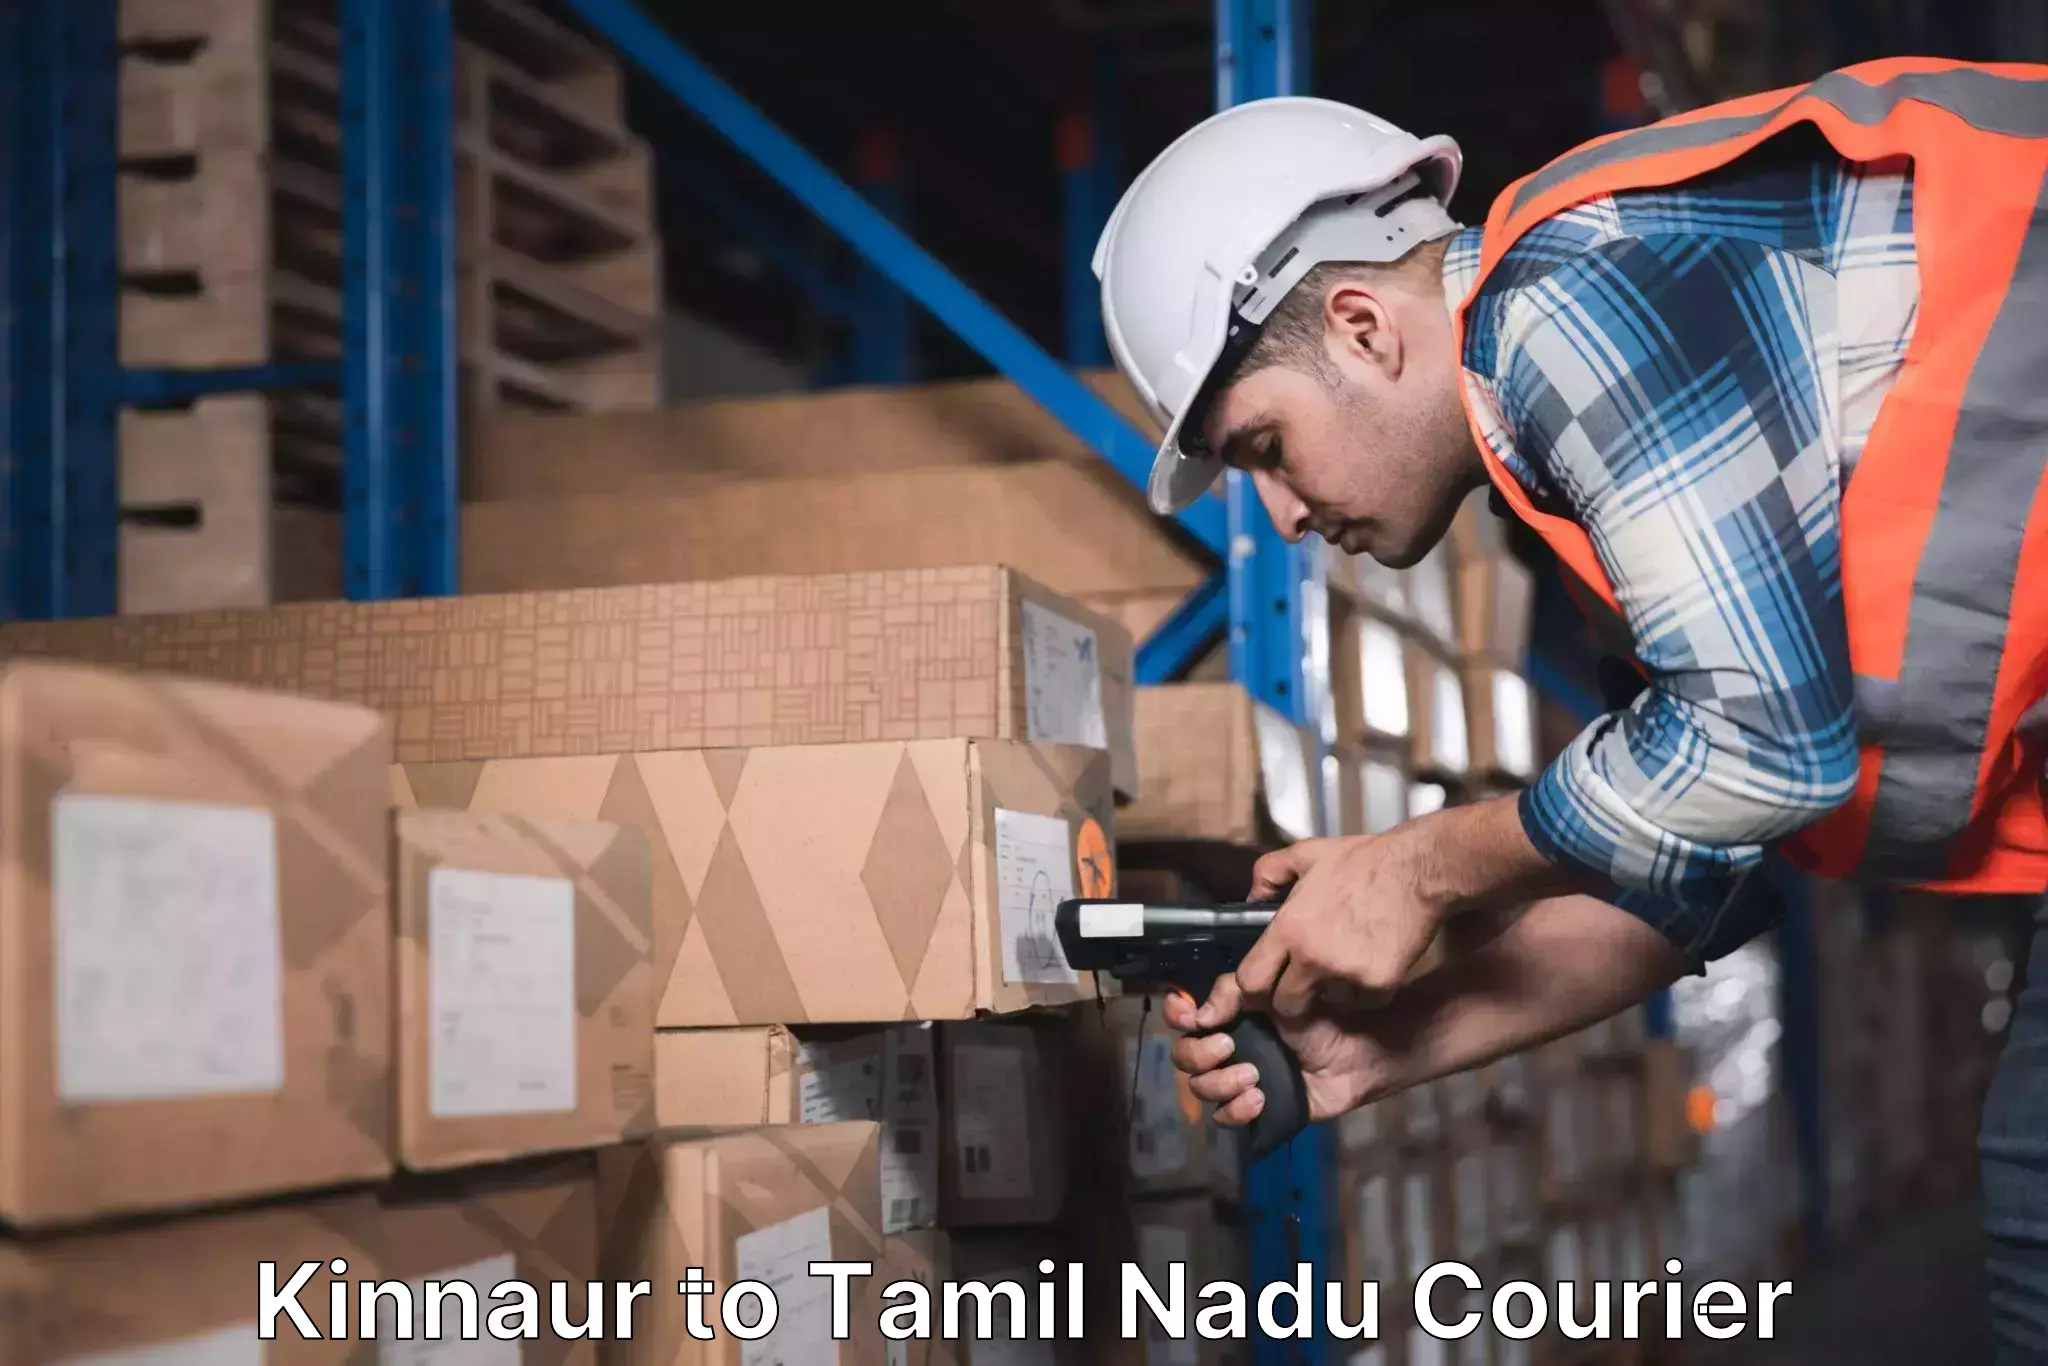 Smart shipping technology Kinnaur to Vriddhachalam